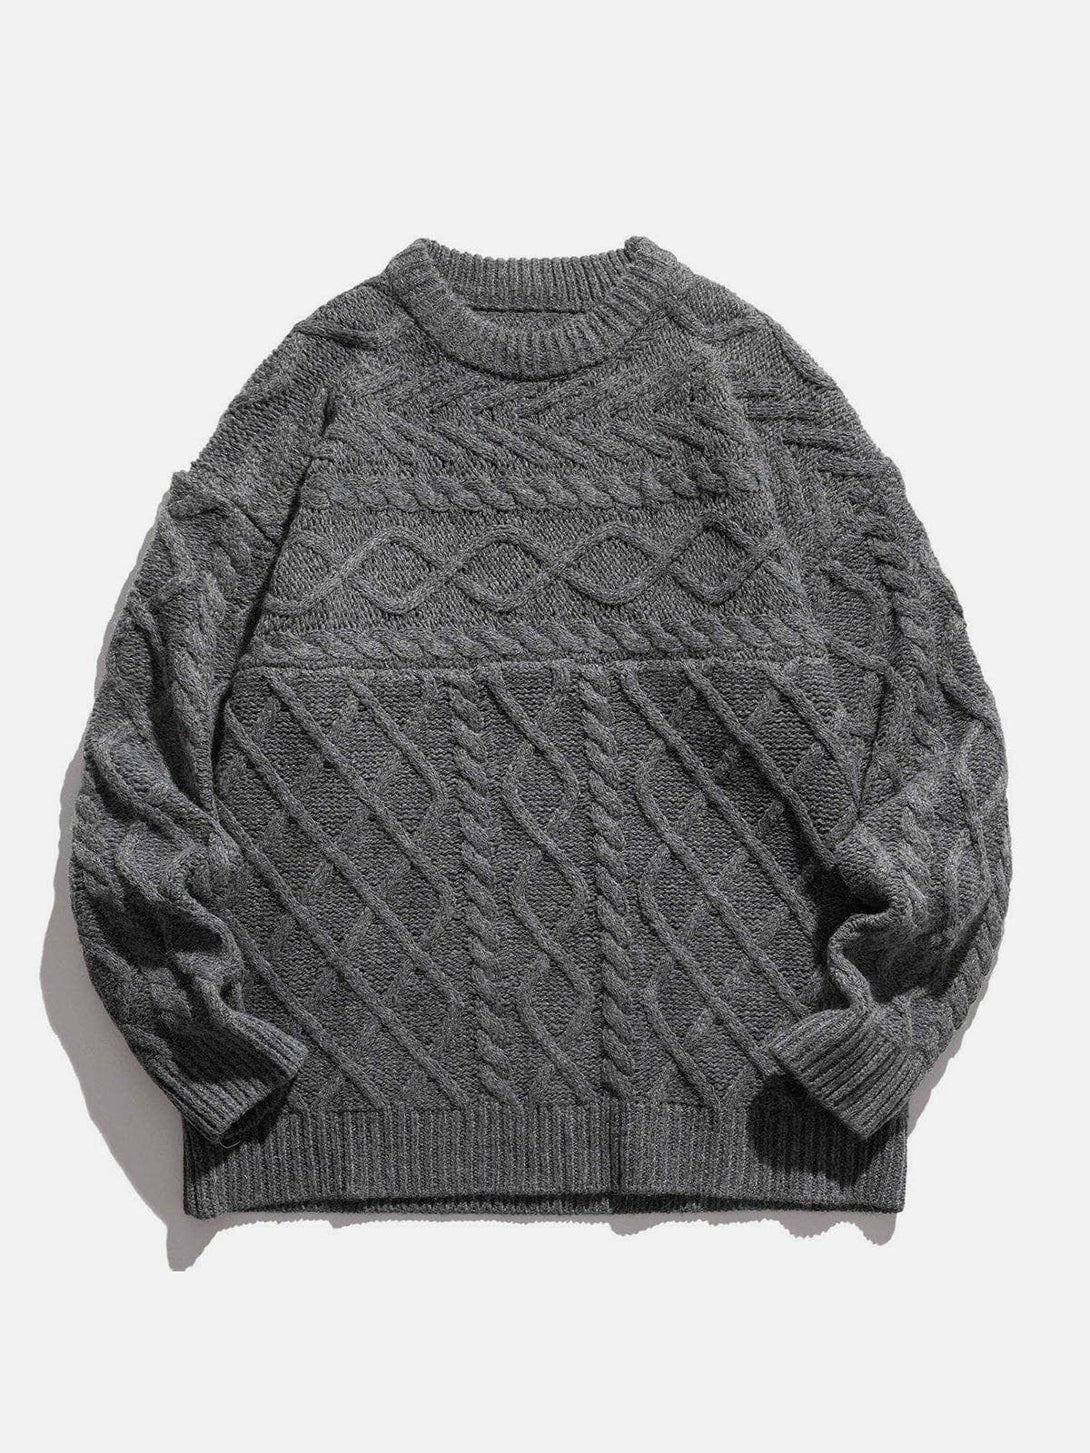 Majesda® - Hemp Pattern Solid Color Knit Sweater outfit ideas streetwear fashion